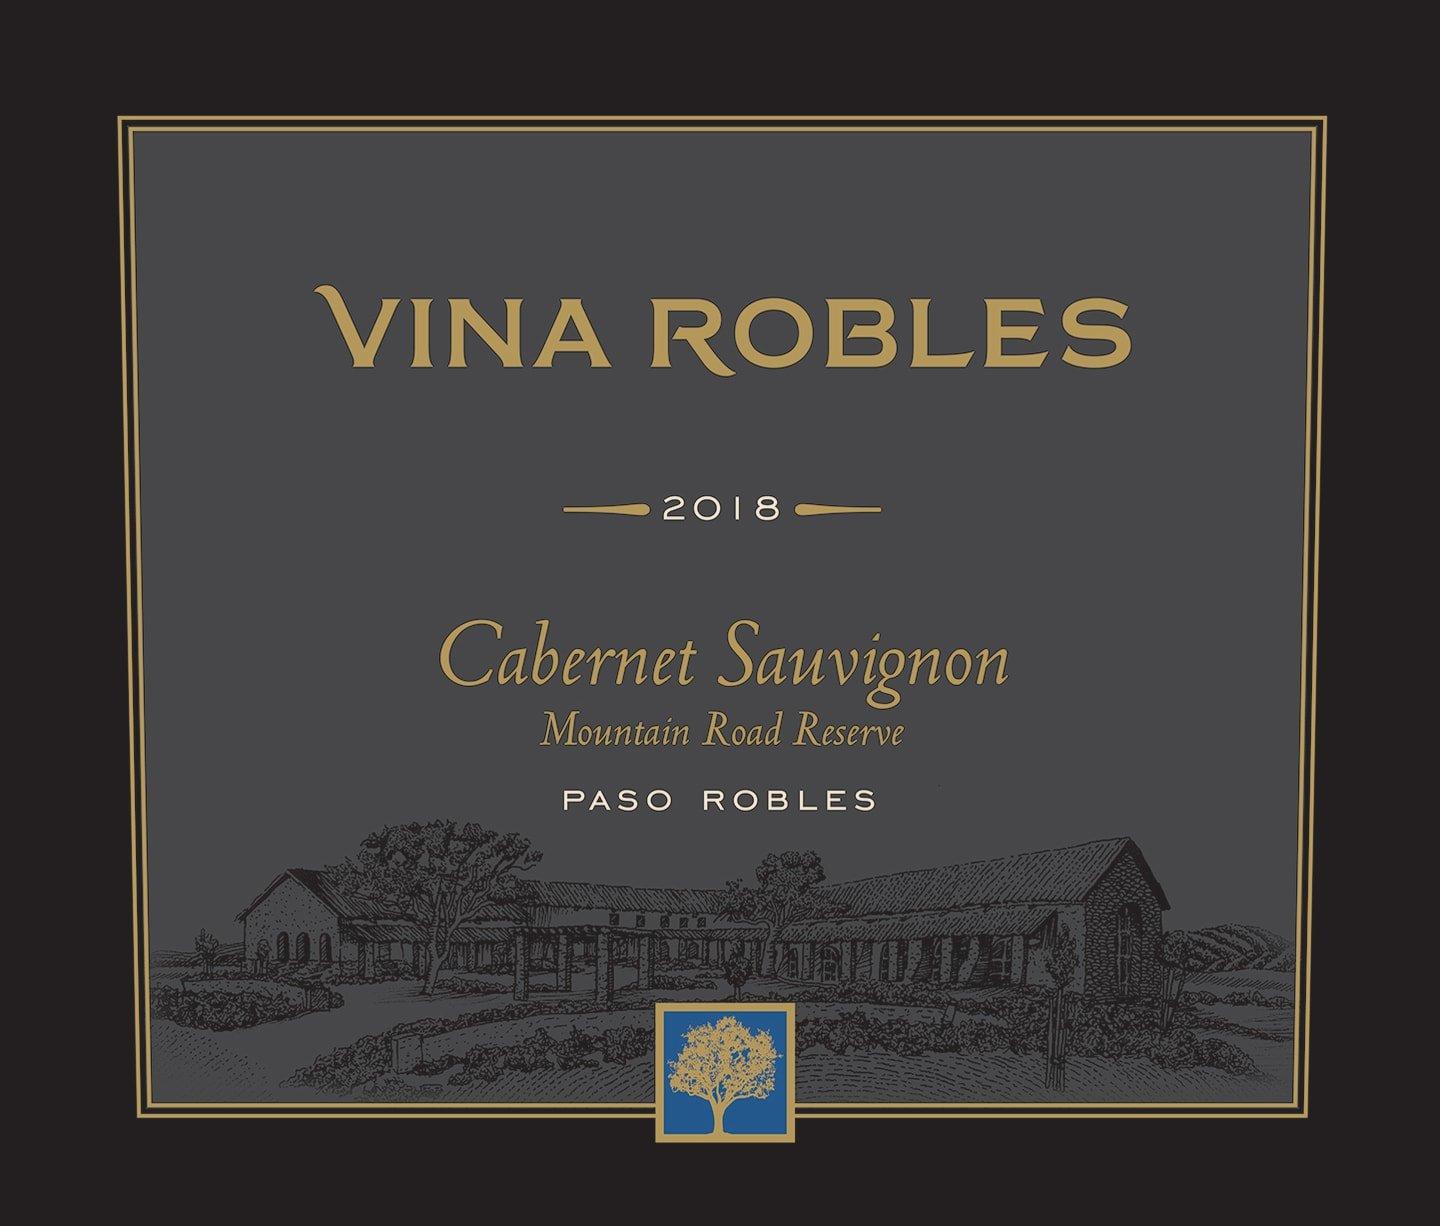 Vina Robles 2018 Cabernet Sauvignon, Mountain Road Reserve, Paso Robles